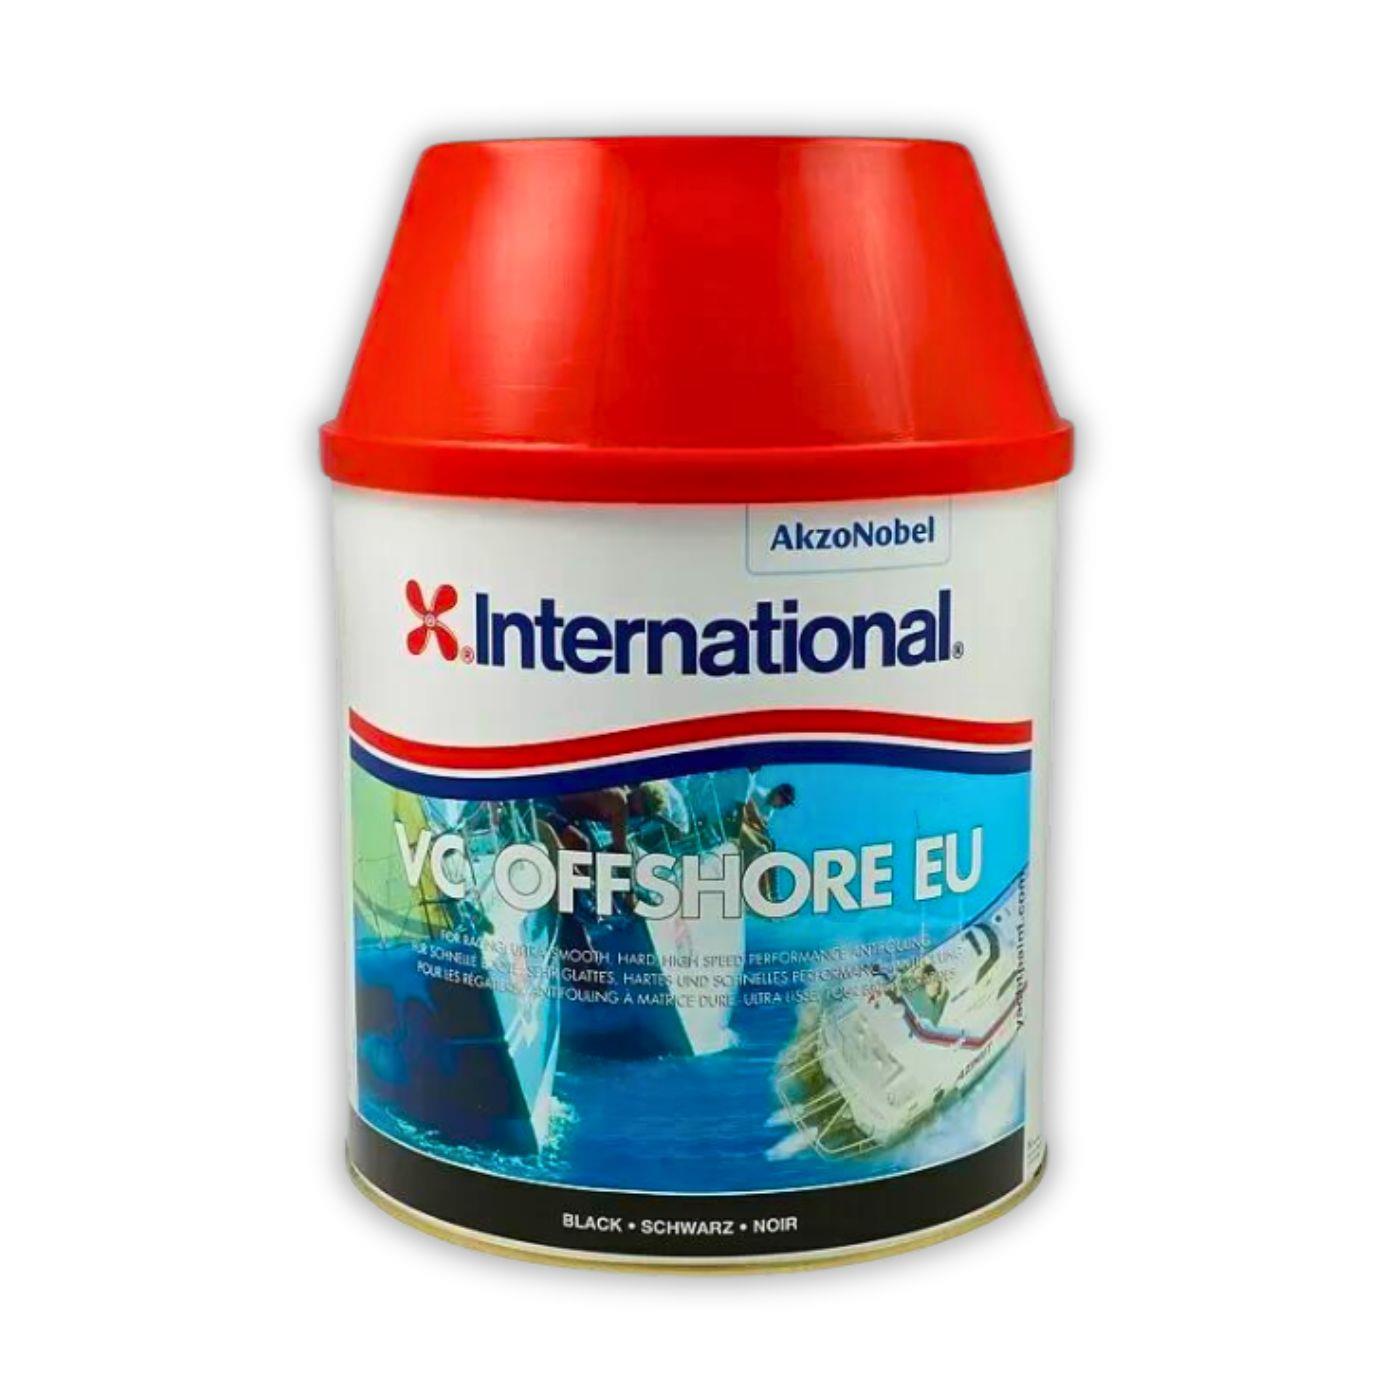 International VC-Offshore EU Antifouling black 2 Liter